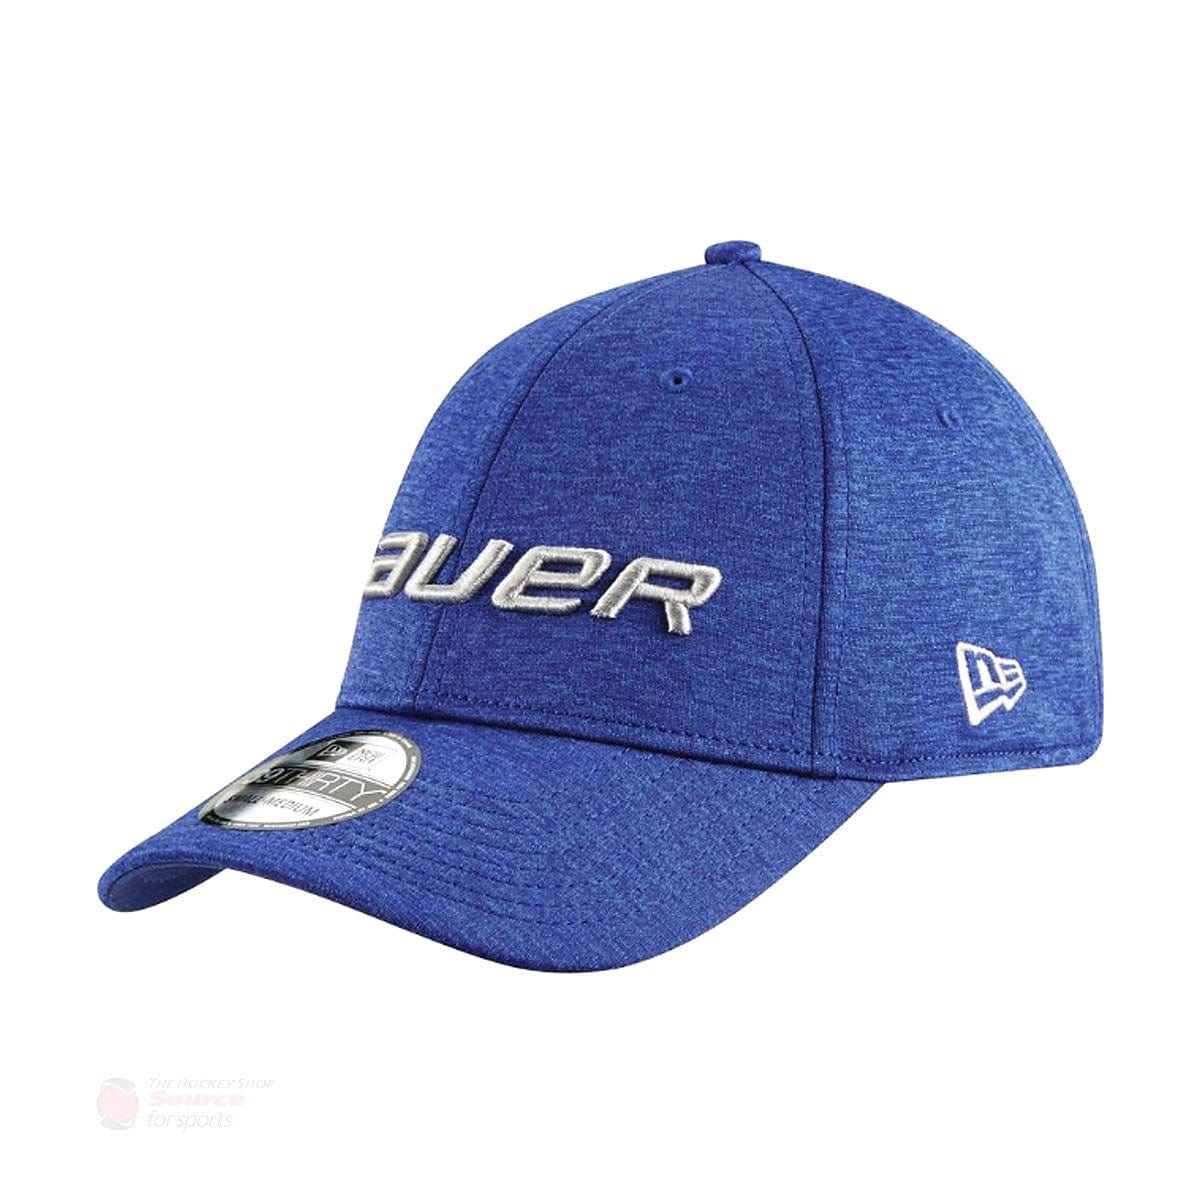 Bauer 39Thirty Youth Flexfit Hat